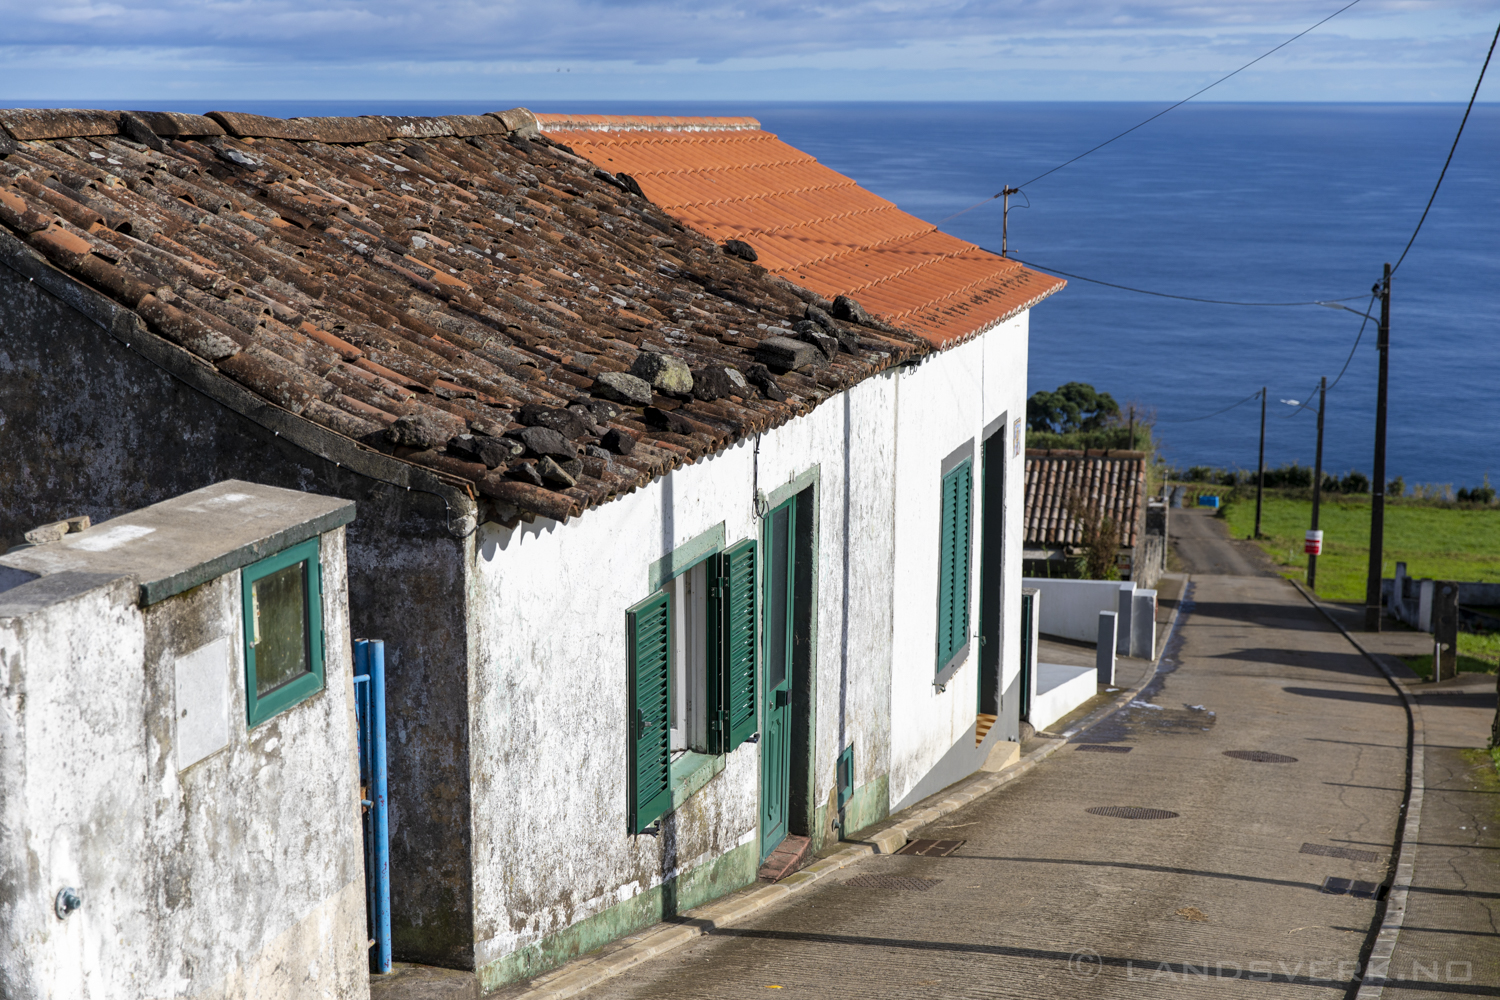 Nordeste. São Miguel, Azores. (Canon EOS 5D Mark IV / Canon EF 24-70mm f/2.8 L II USM)